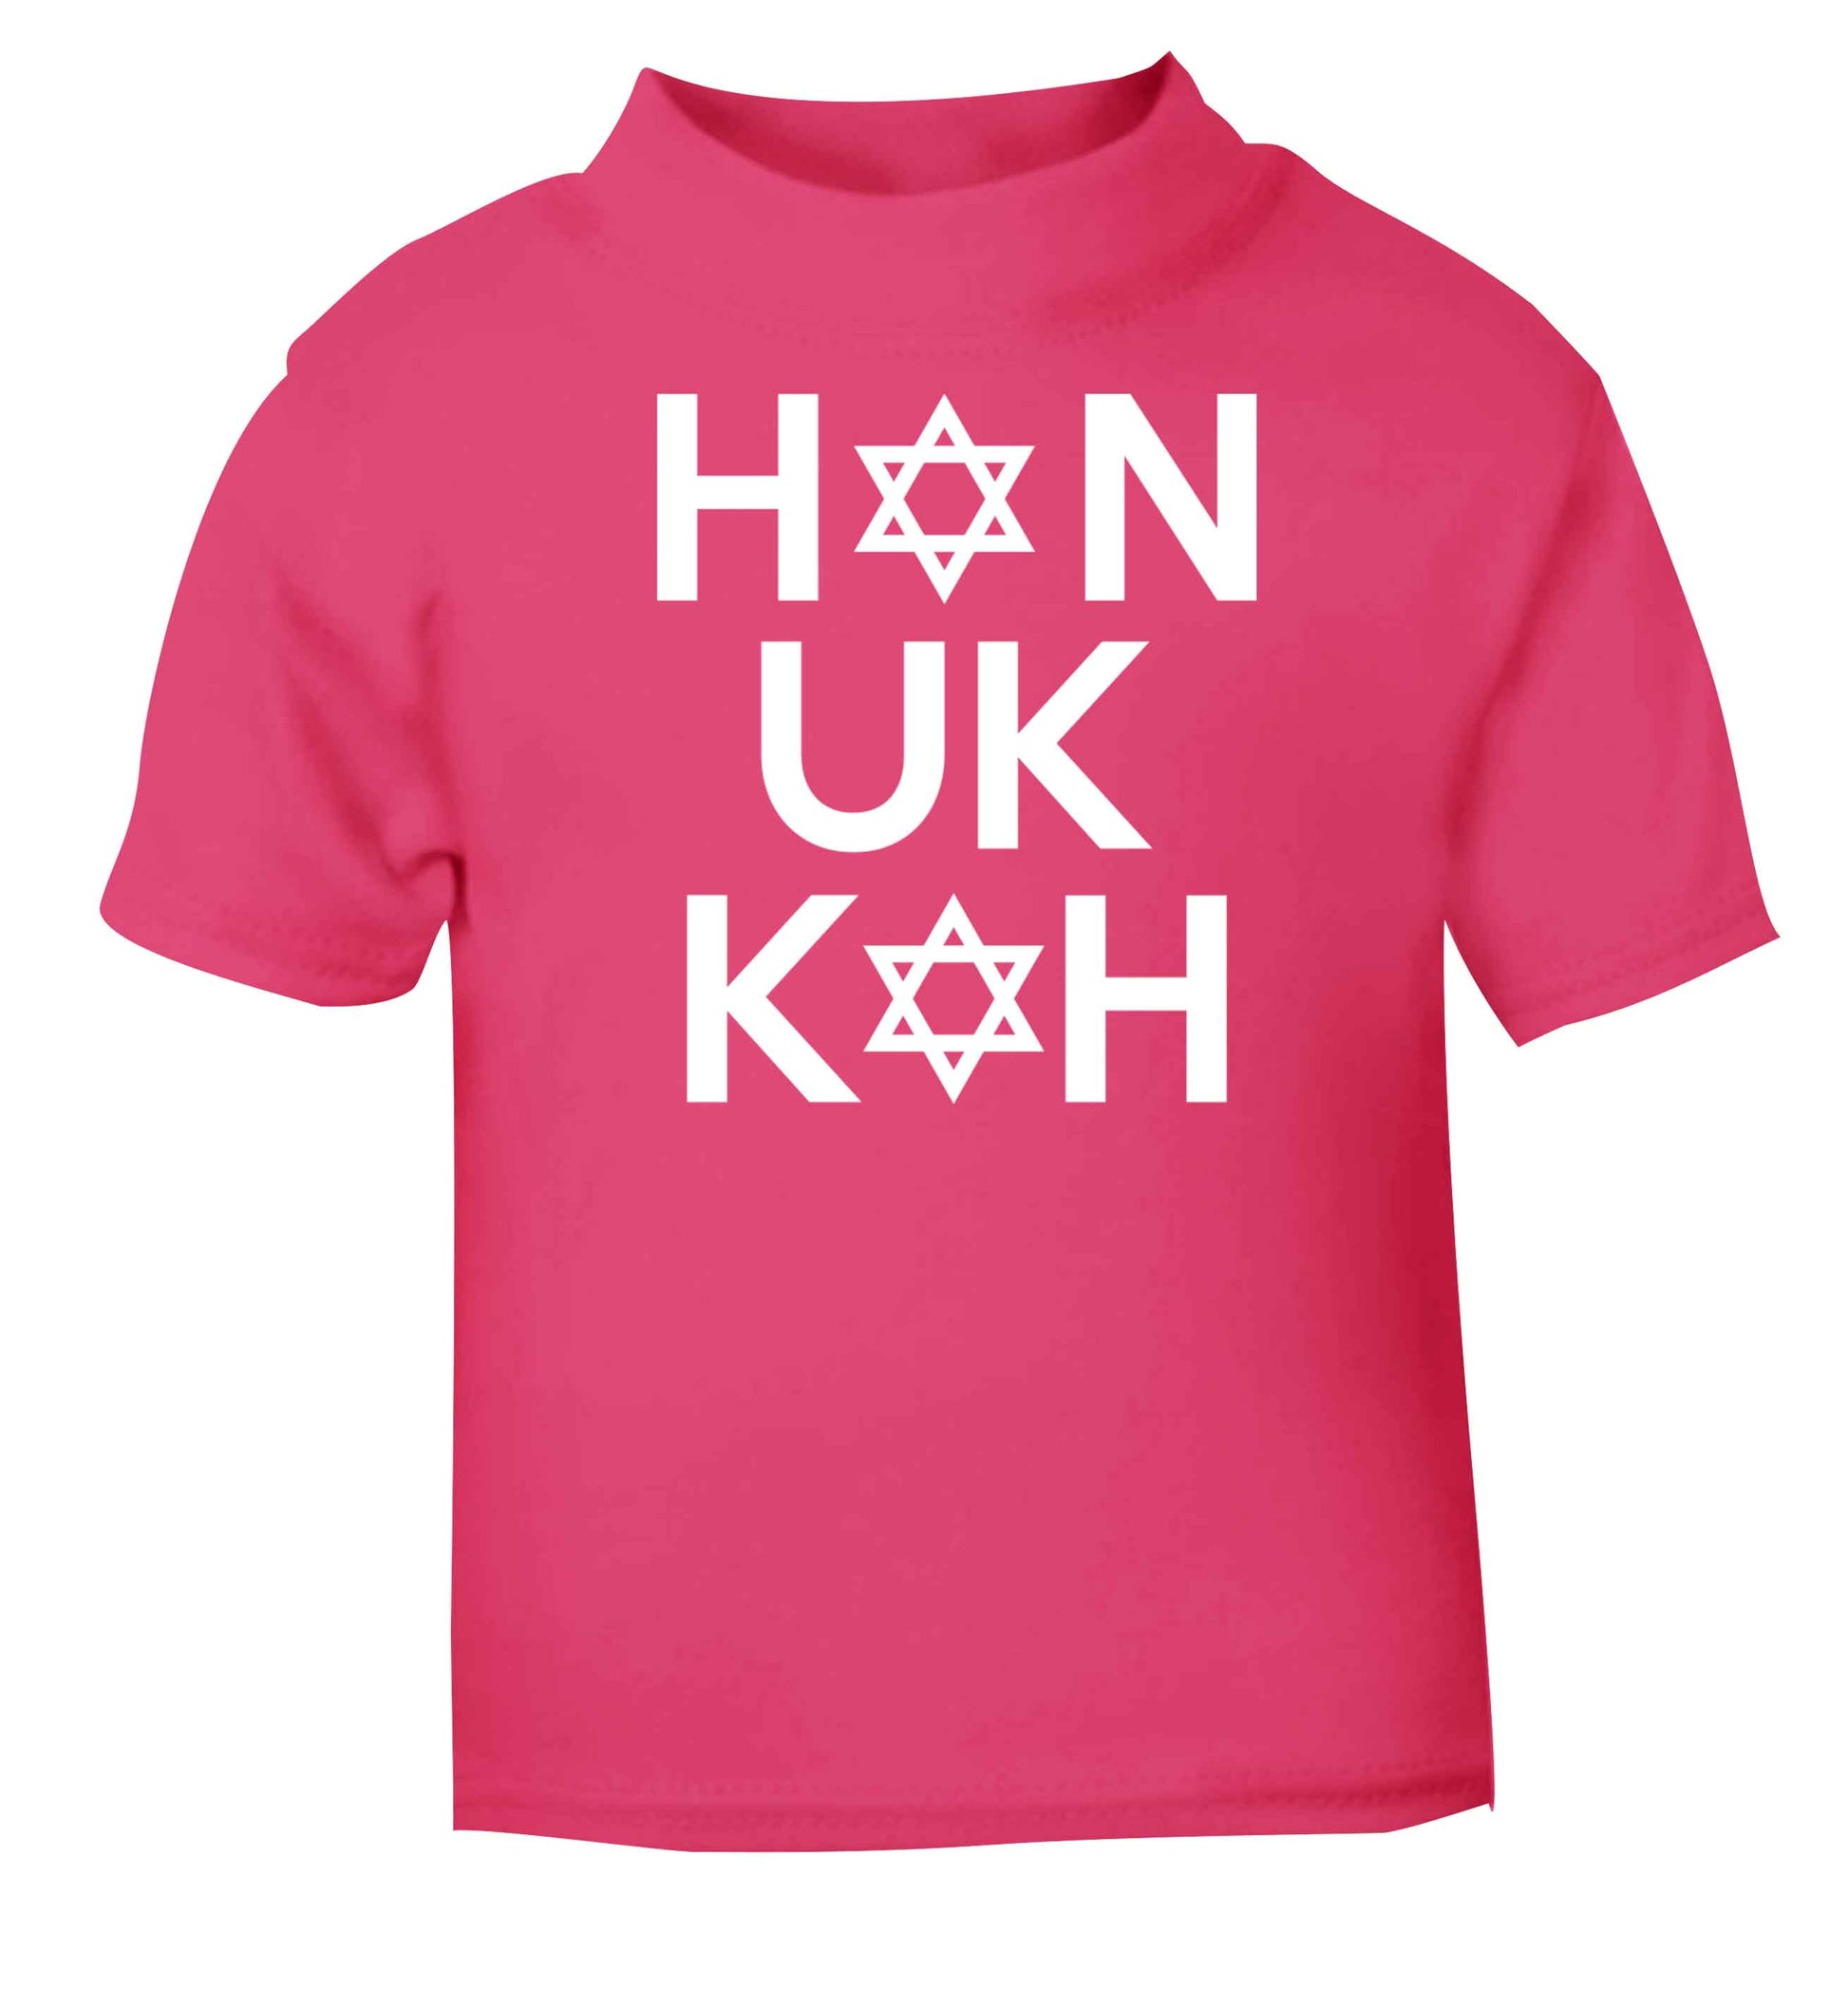 Han uk kah  Hanukkah star of david pink baby toddler Tshirt 2 Years